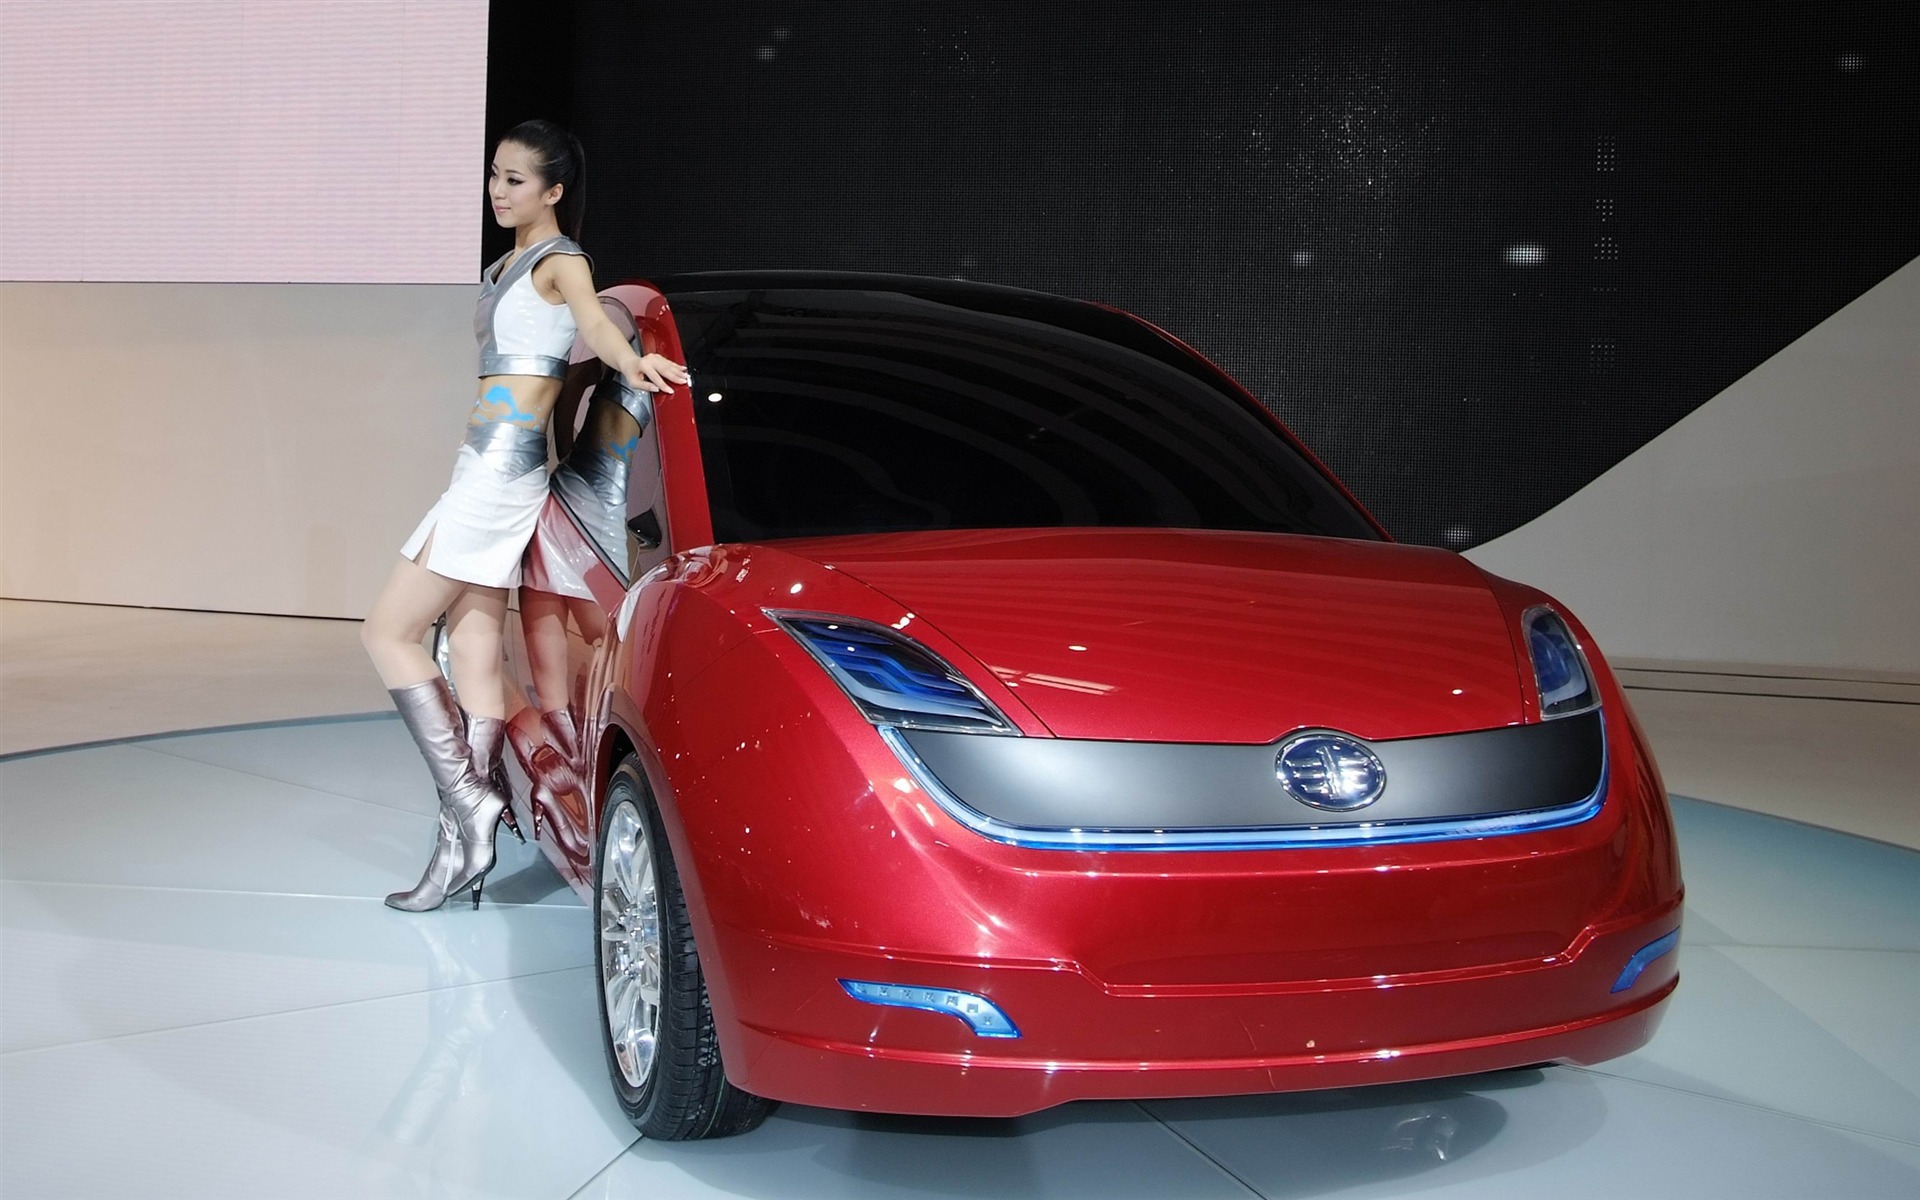 2010 Salón Internacional del Automóvil de Beijing Heung Che belleza (obras barras de refuerzo) #24 - 1920x1200